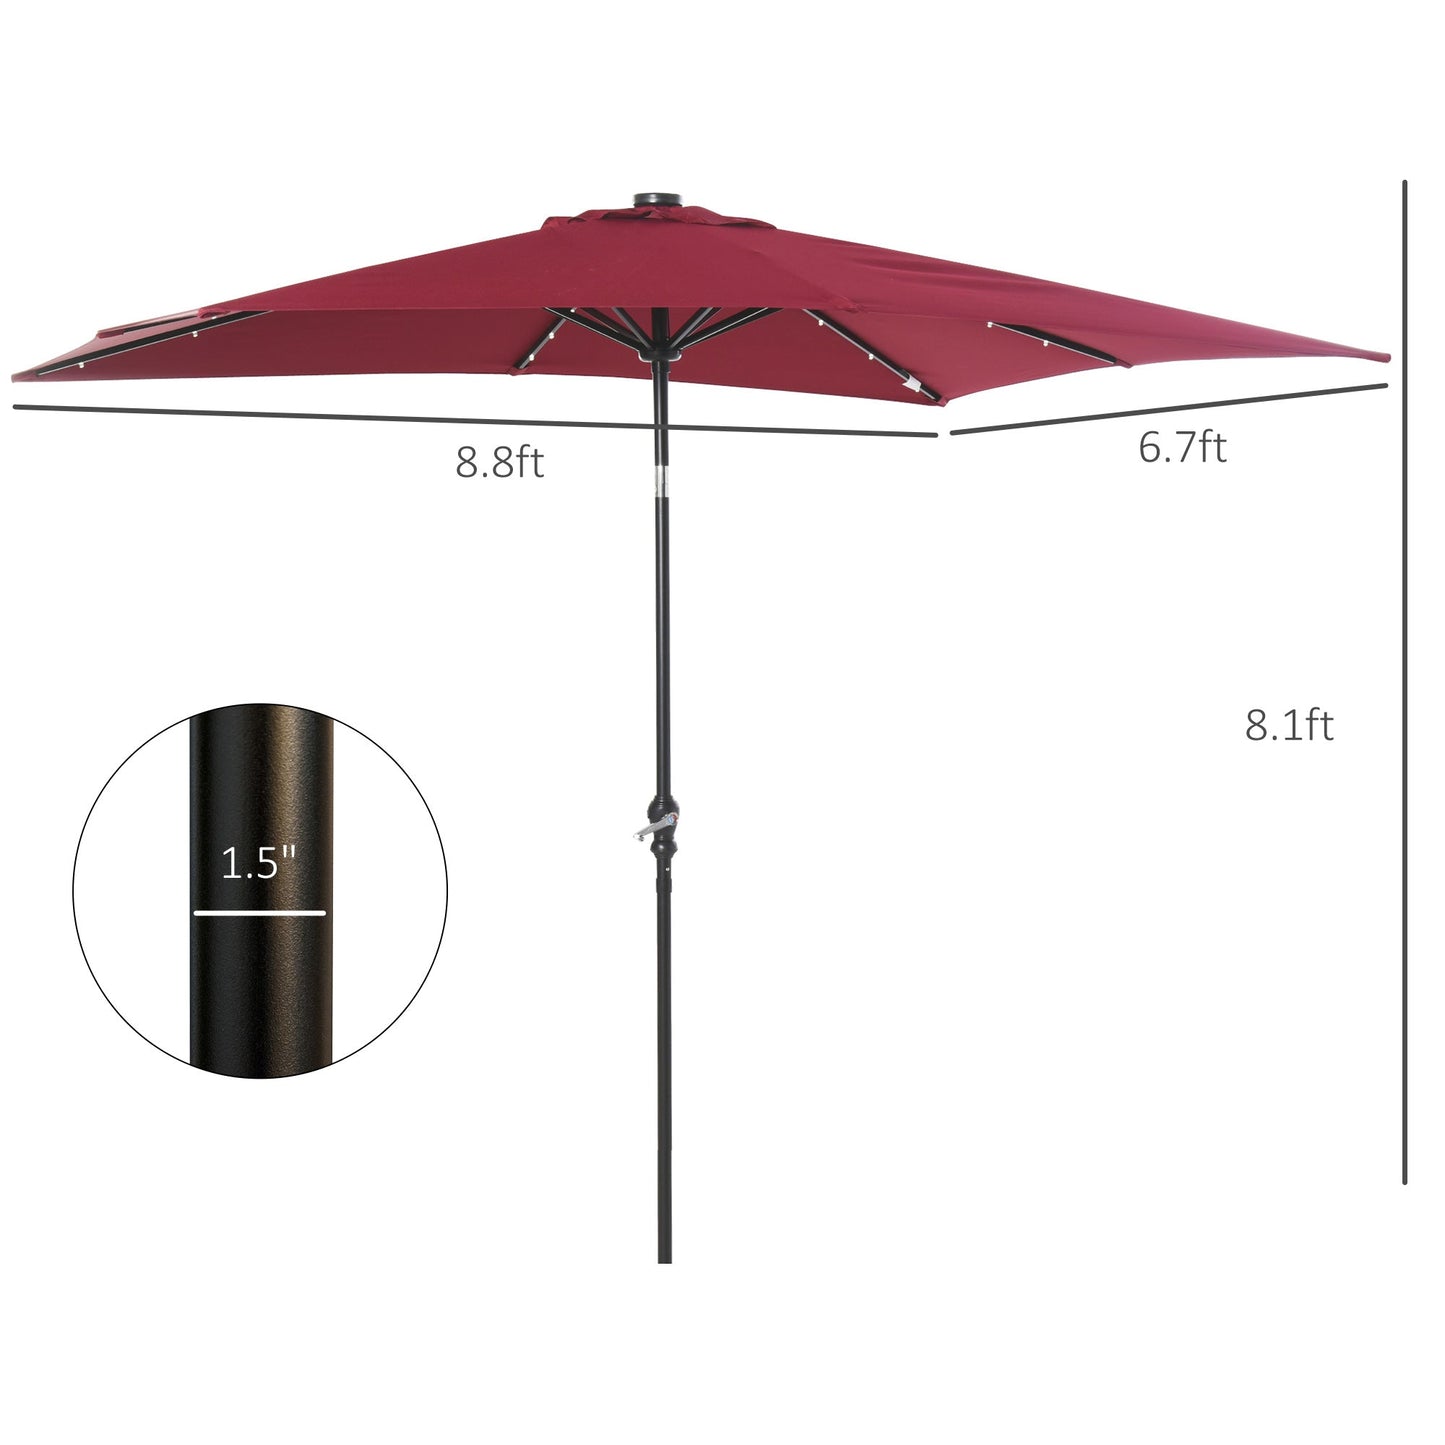 Outdoor and Garden-9ft Patio Umbrella Outdoor Table Market Umbrella with Crank & Solar Lights for Garden, Lawn, Deck, Backyard & Pool, Red - Outdoor Style Company